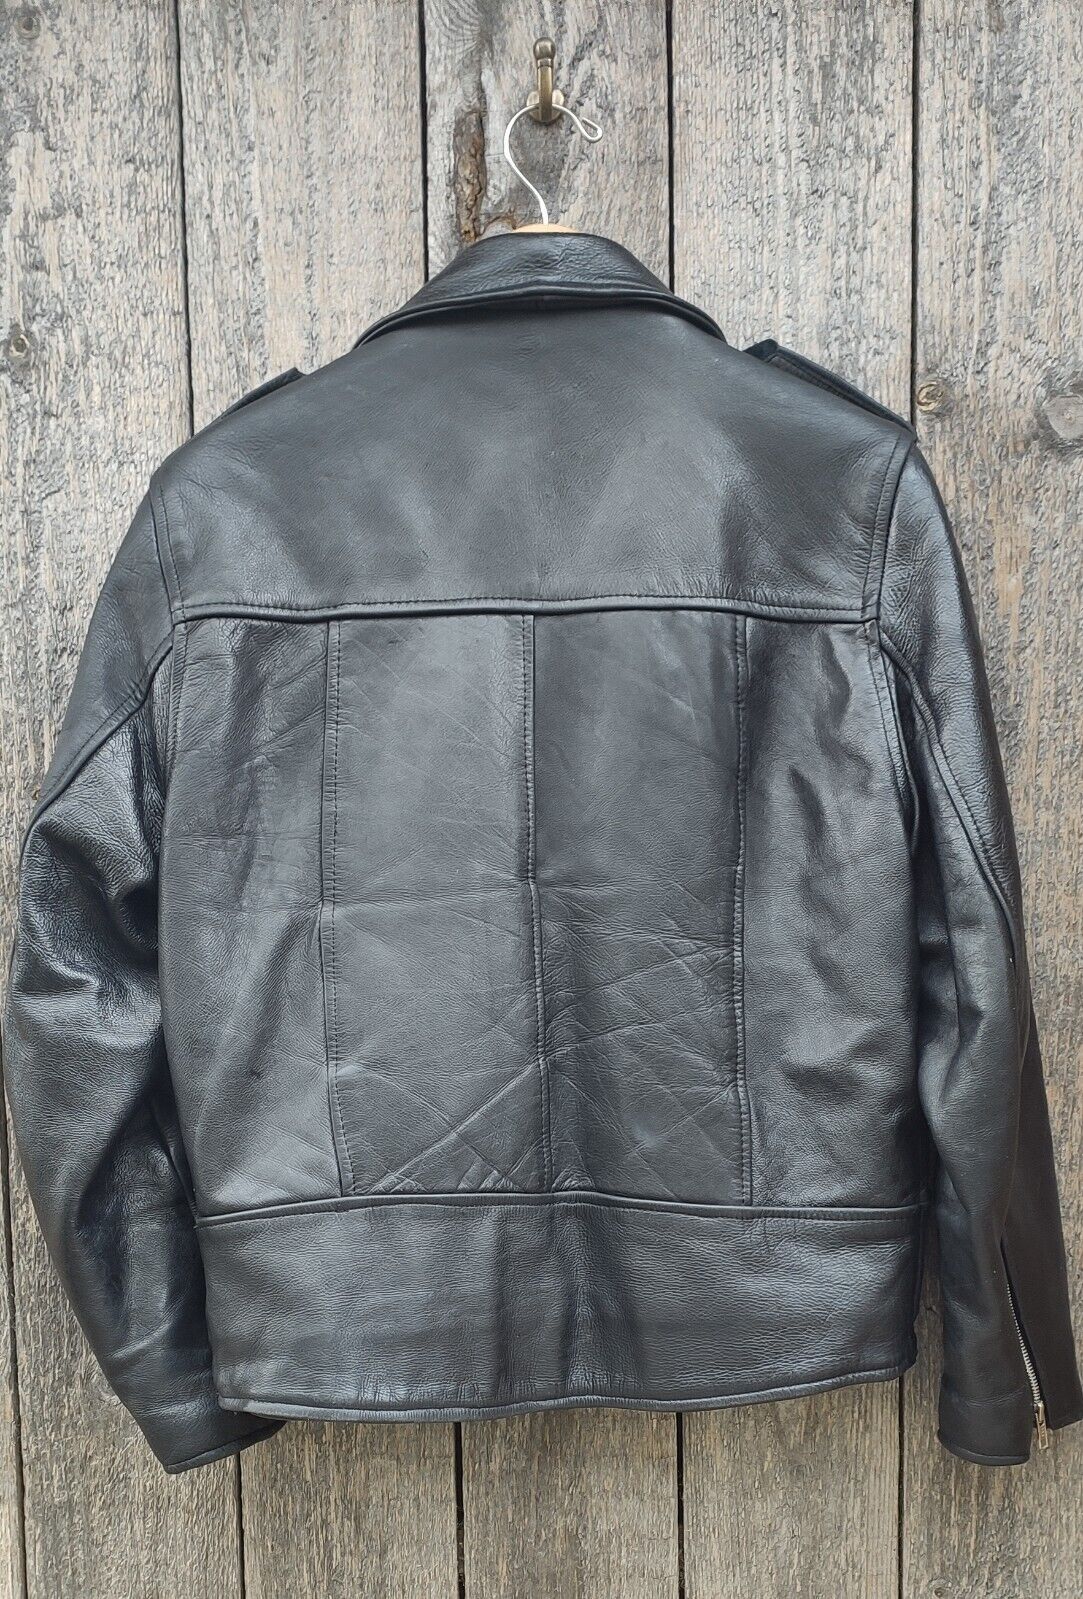 Image of Vintage BLL Black Leather Motorcycle Jacket Size 42" Medium/Biker/Rocker